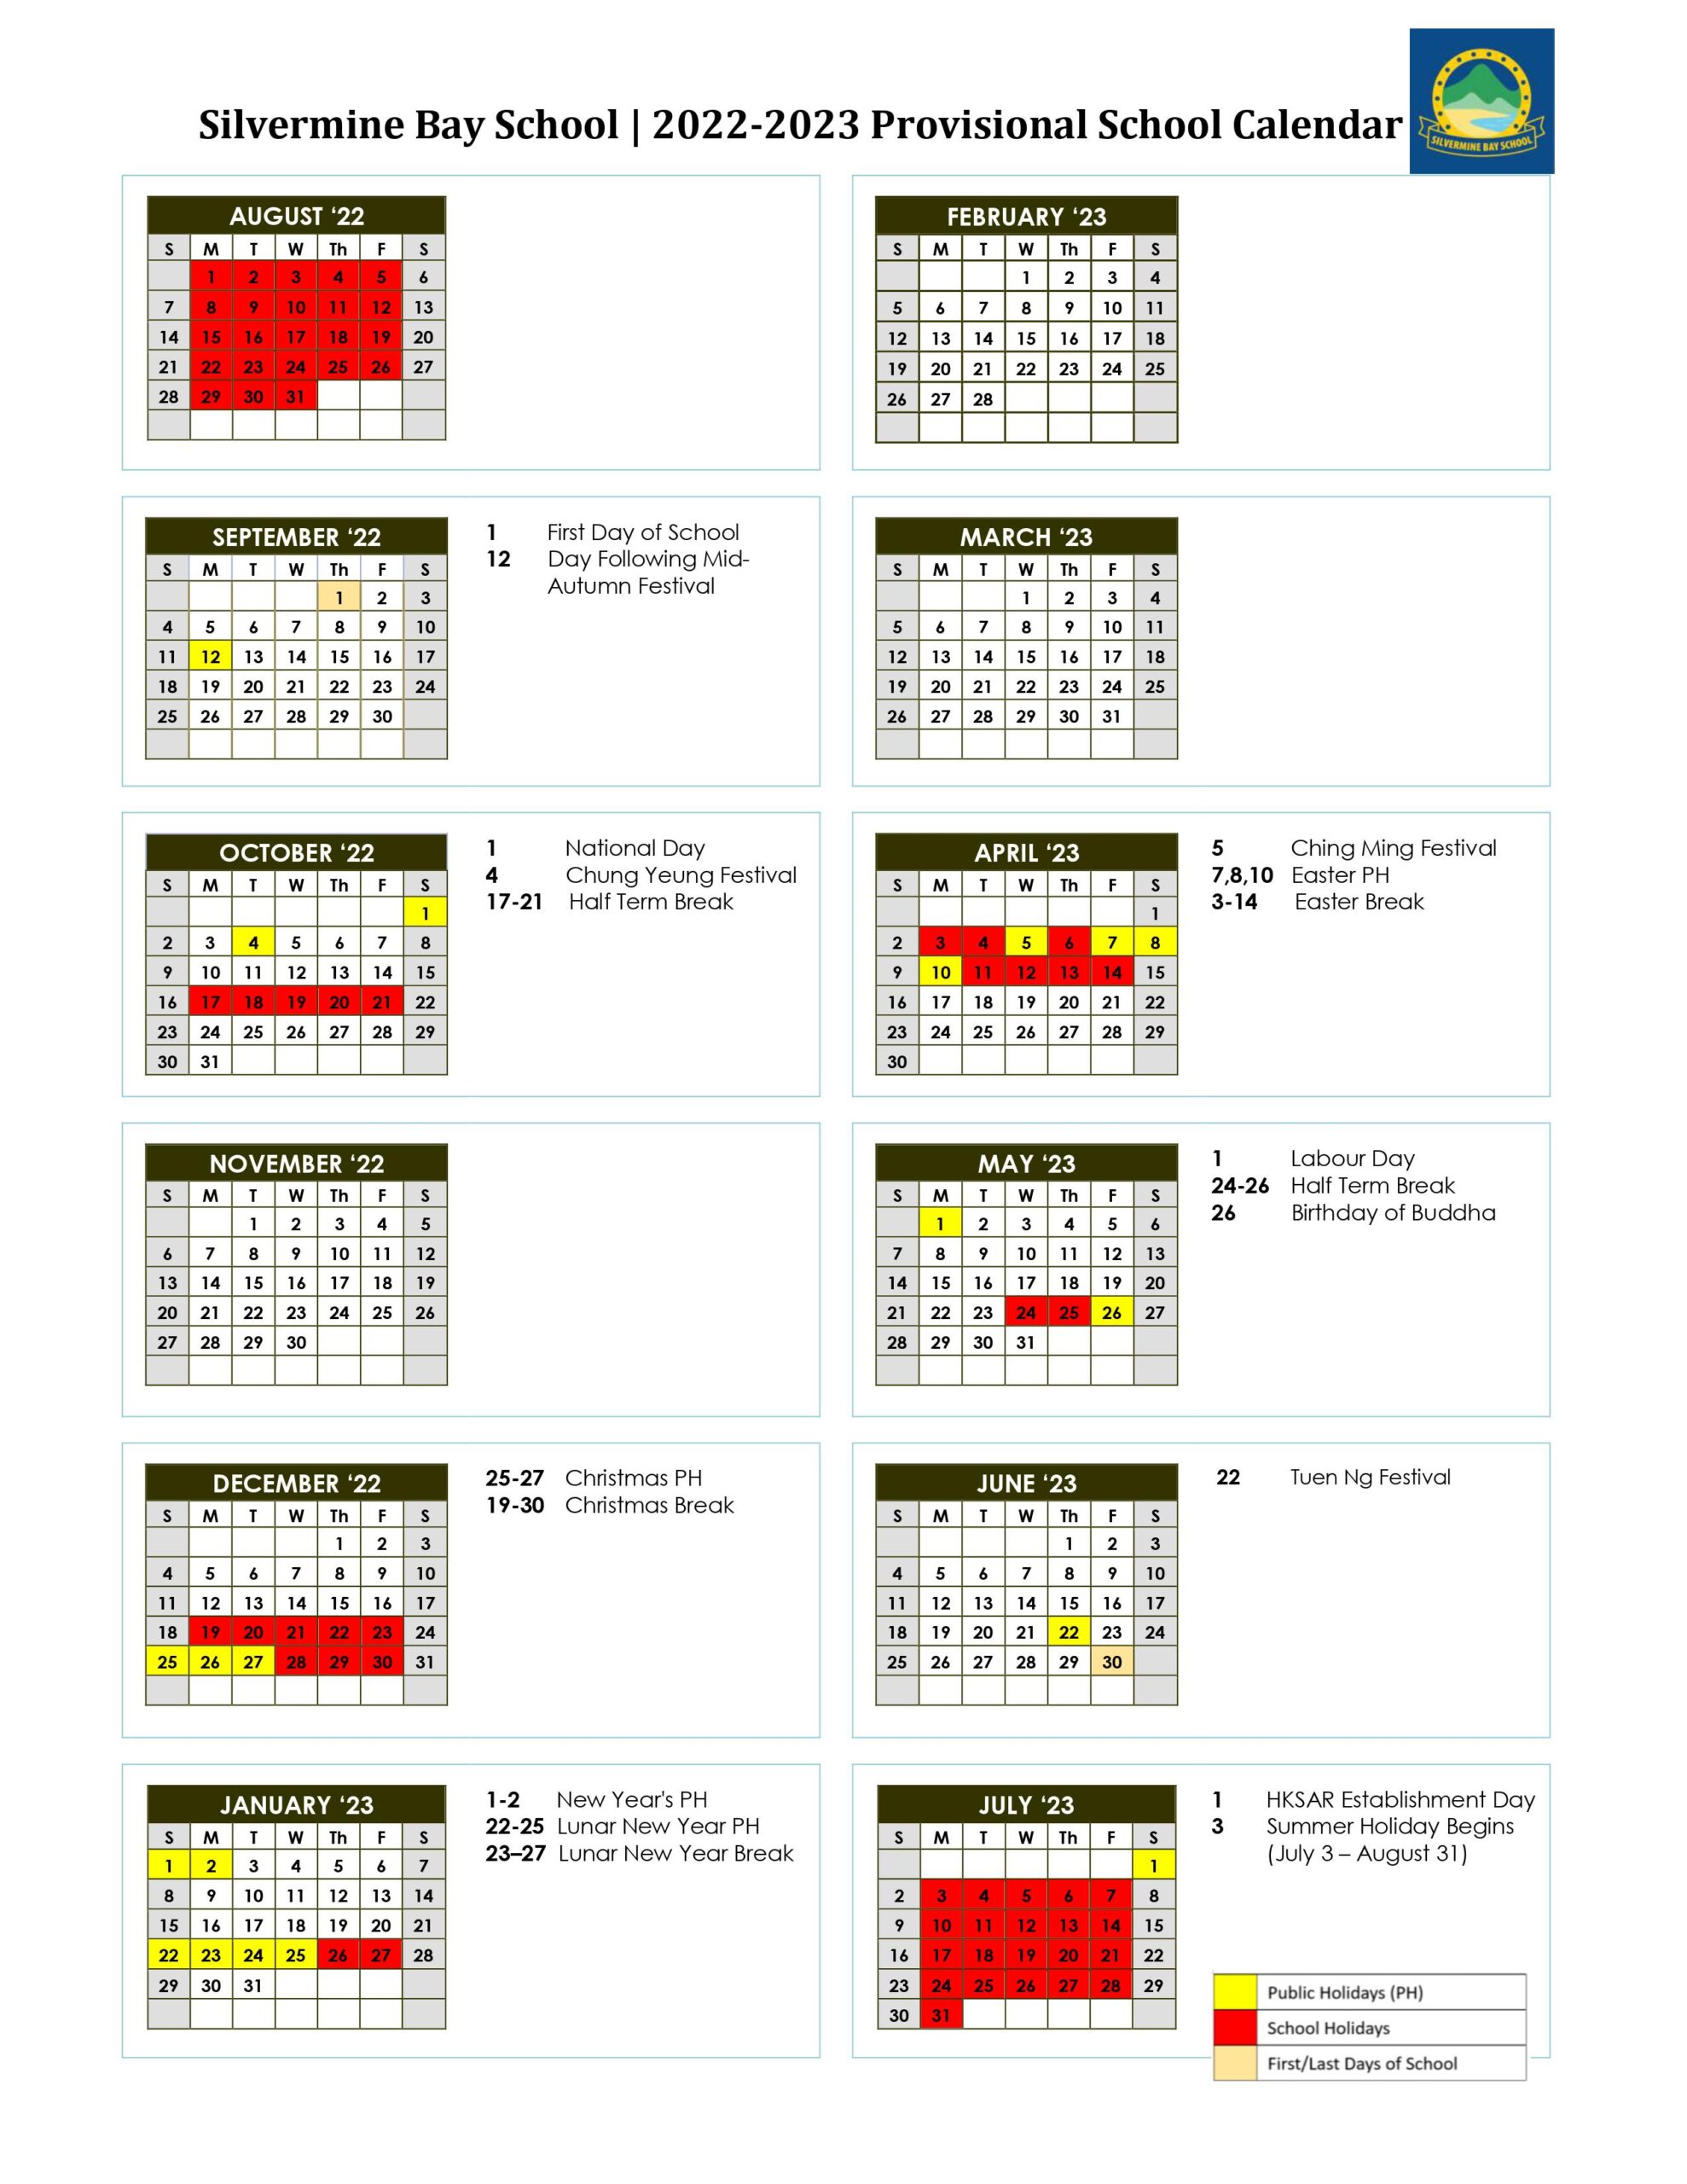 School Calendar 3